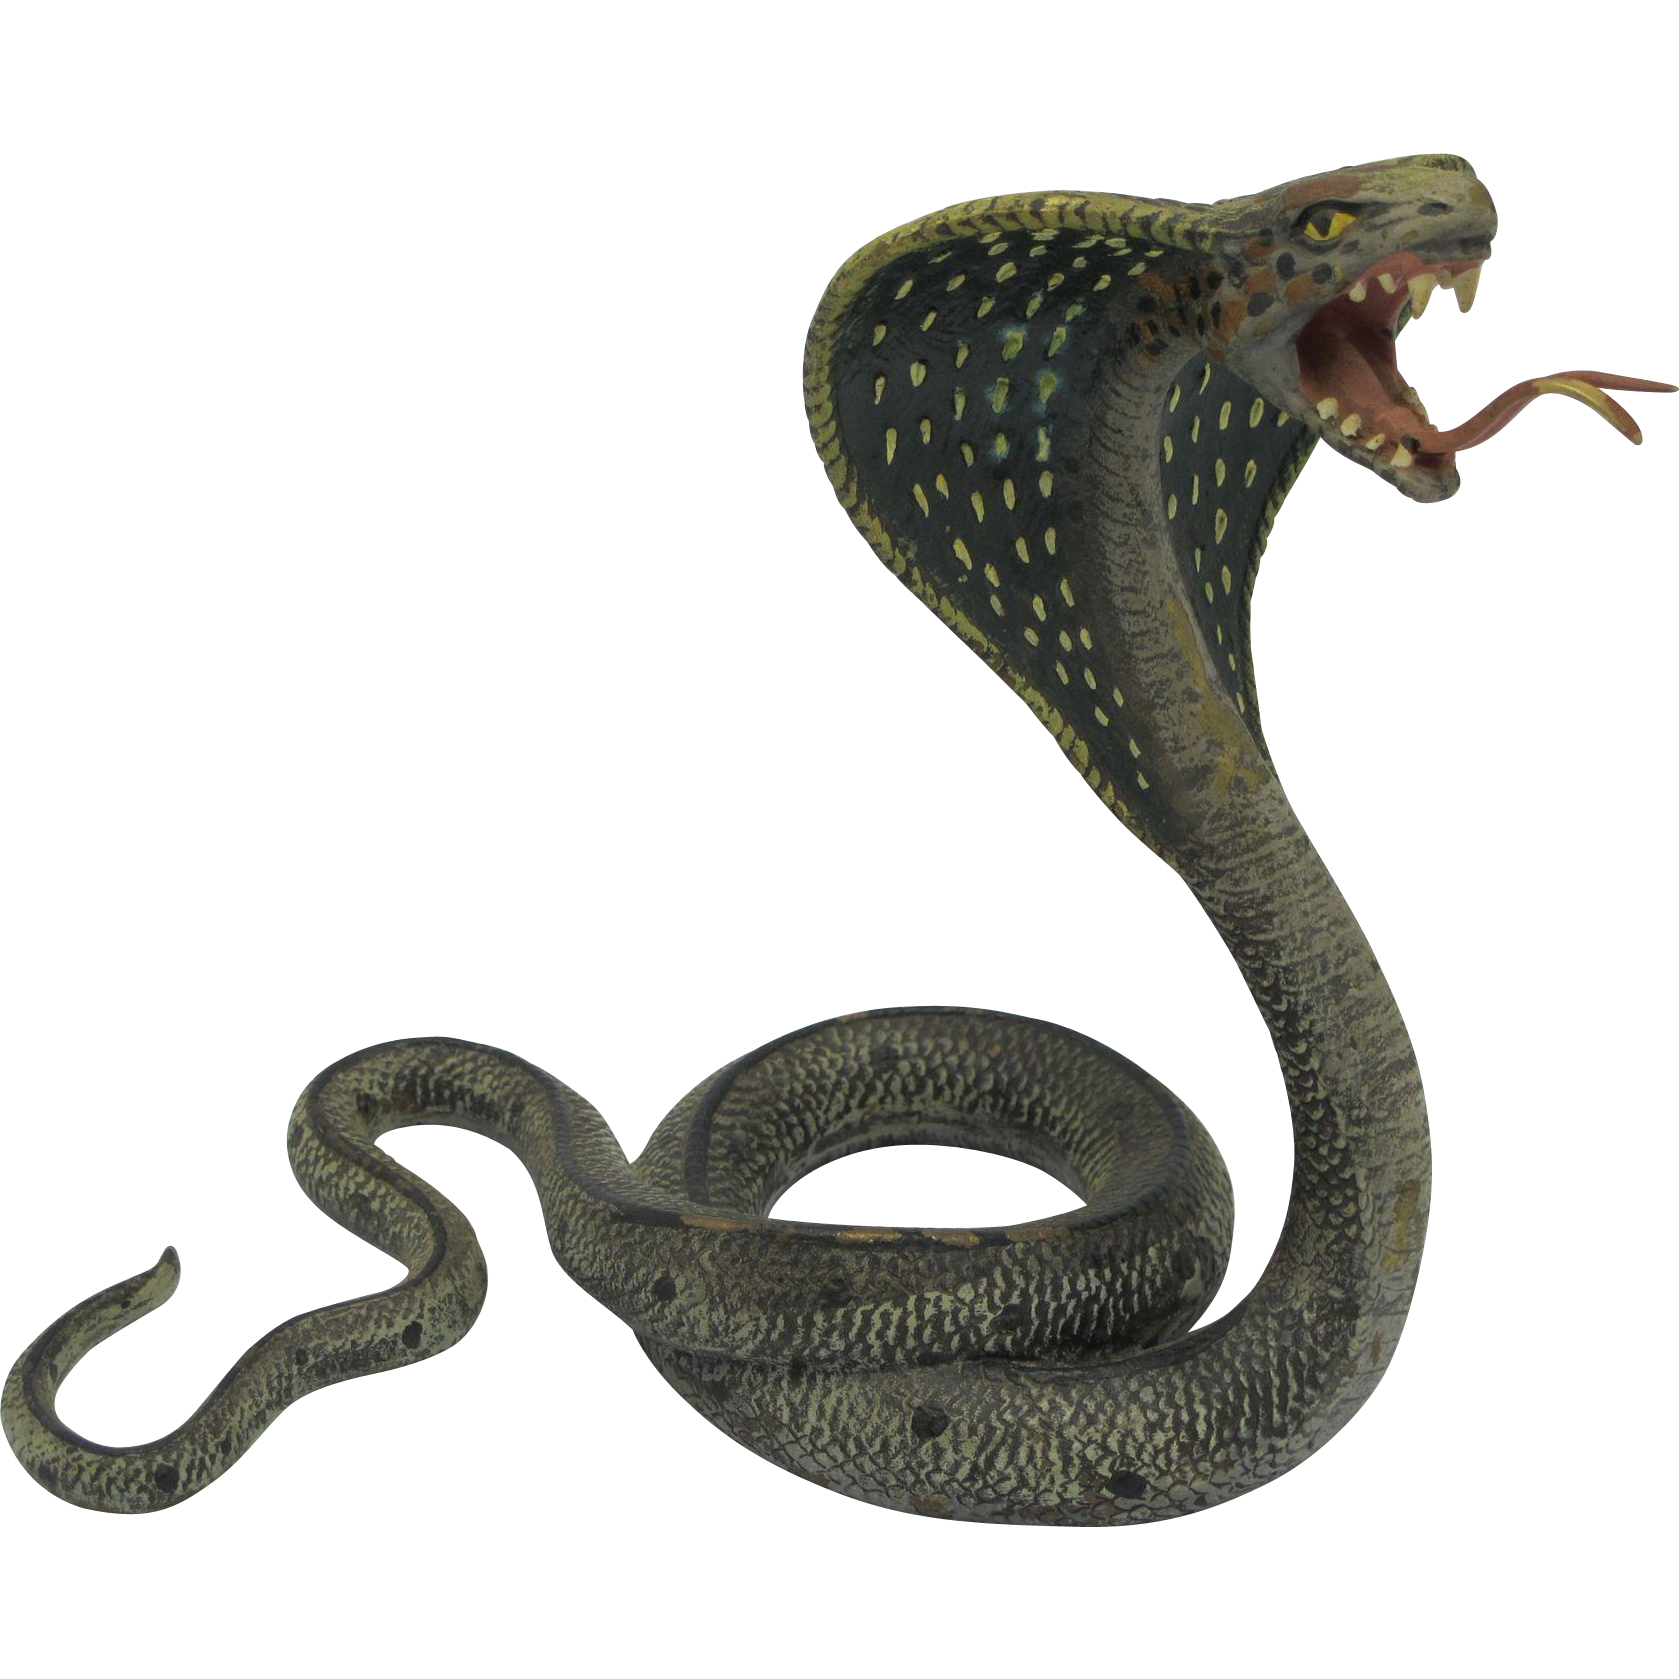 Cobra Snake Photos PNG Image